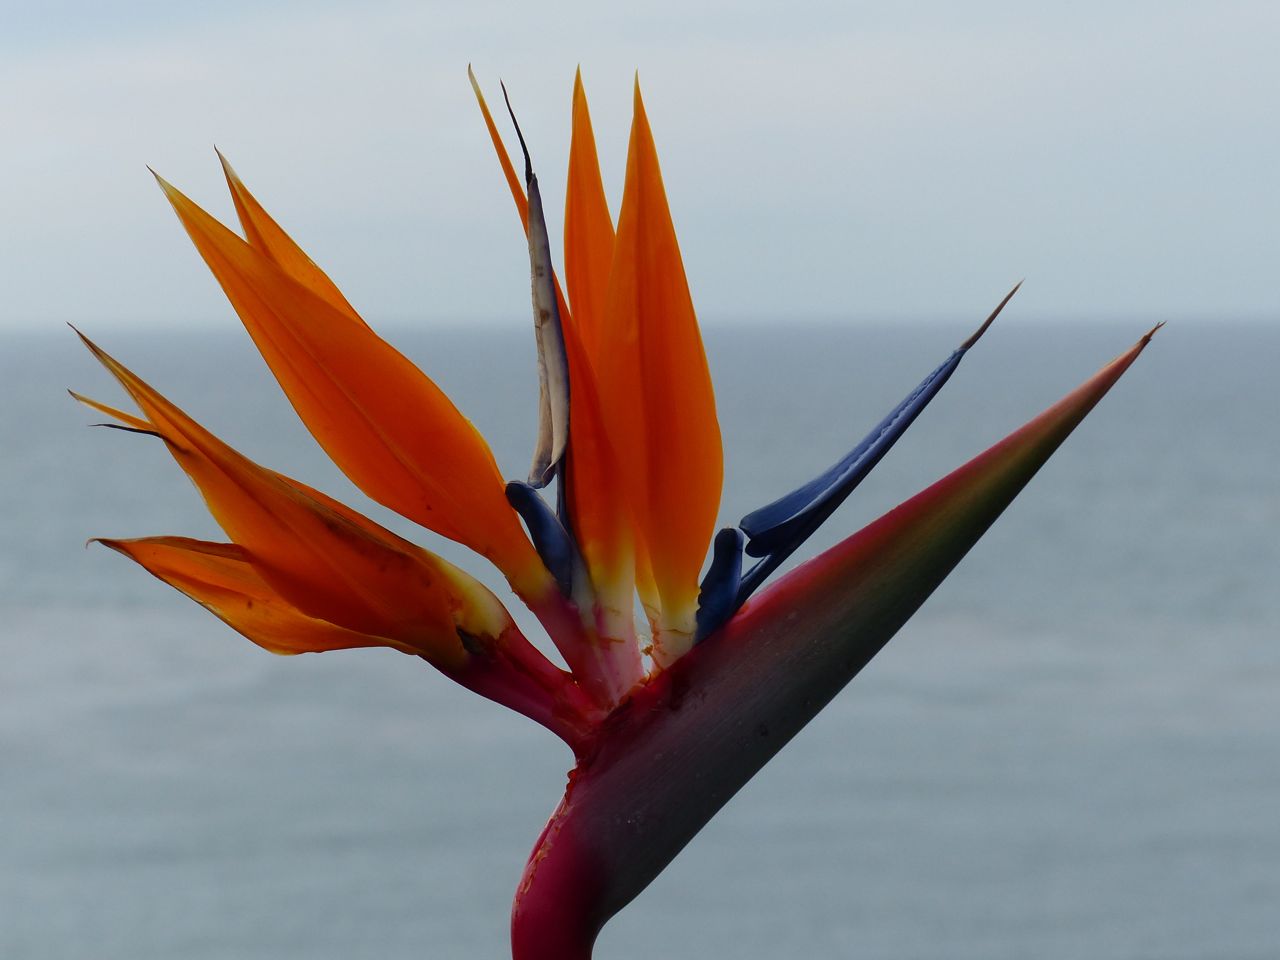 Swamis bird of paradise flower